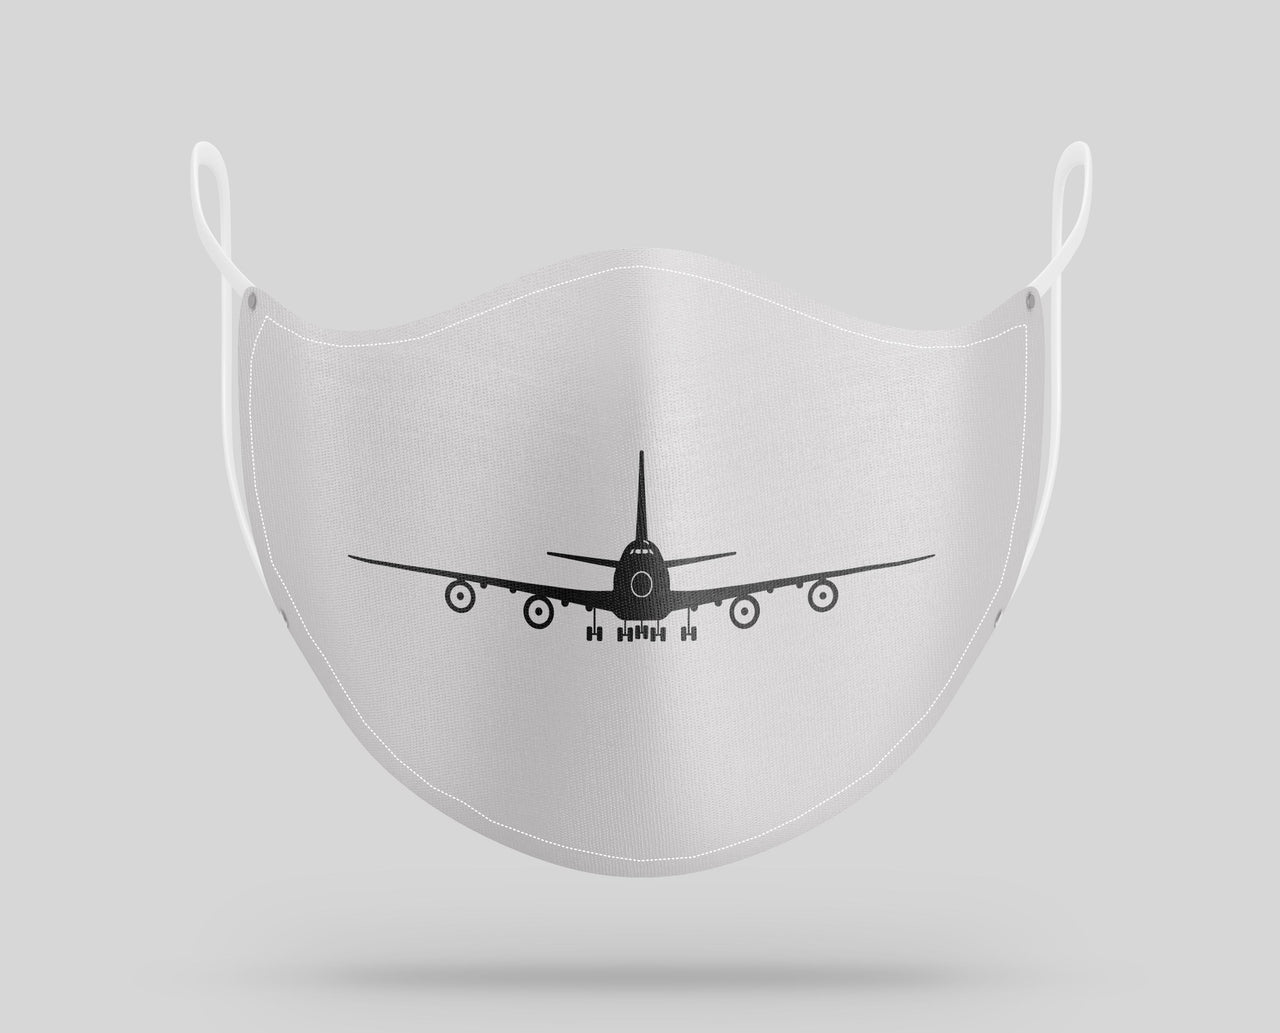 Boeing 747 Silhouette Designed Face Masks